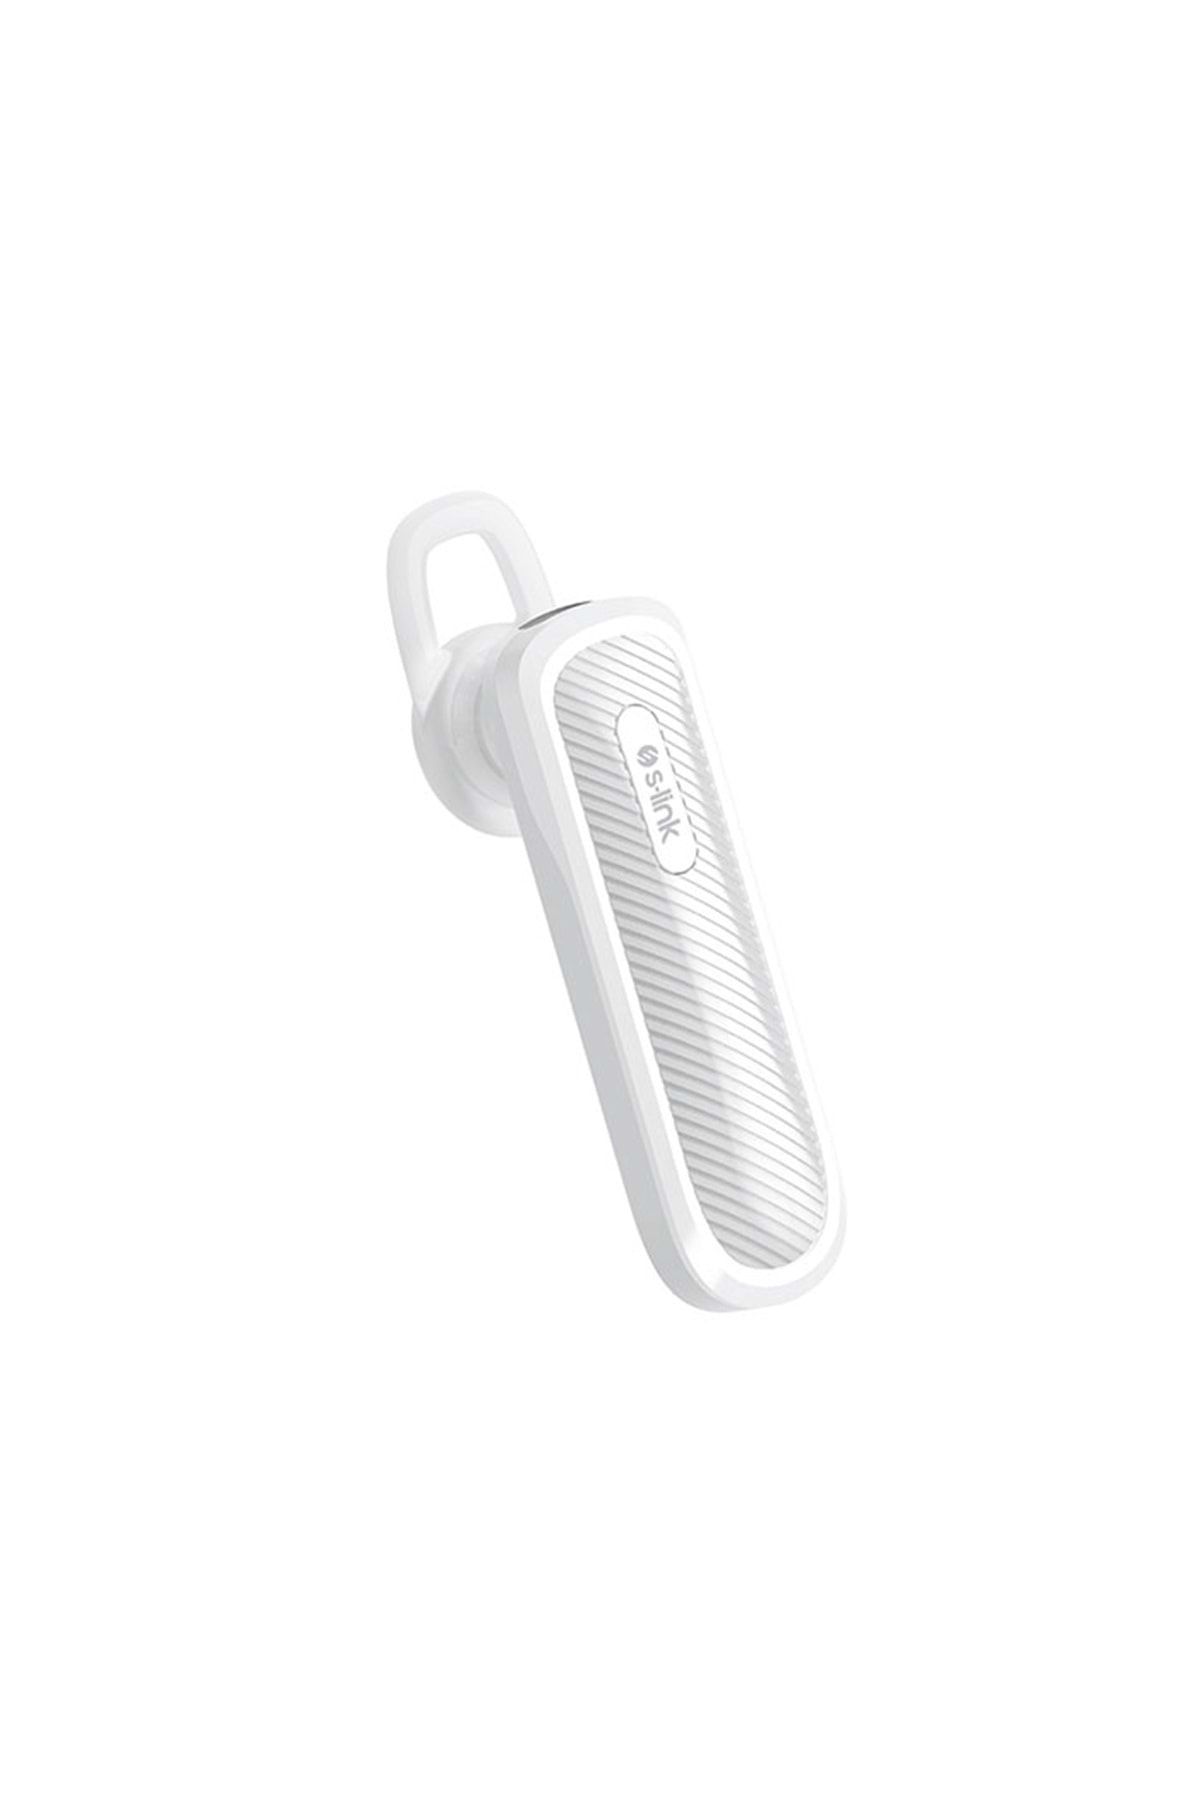 S-Link Sl-bt35 Mobil Telefon Uyumlu Beyaz Bluetooth Kulaklık